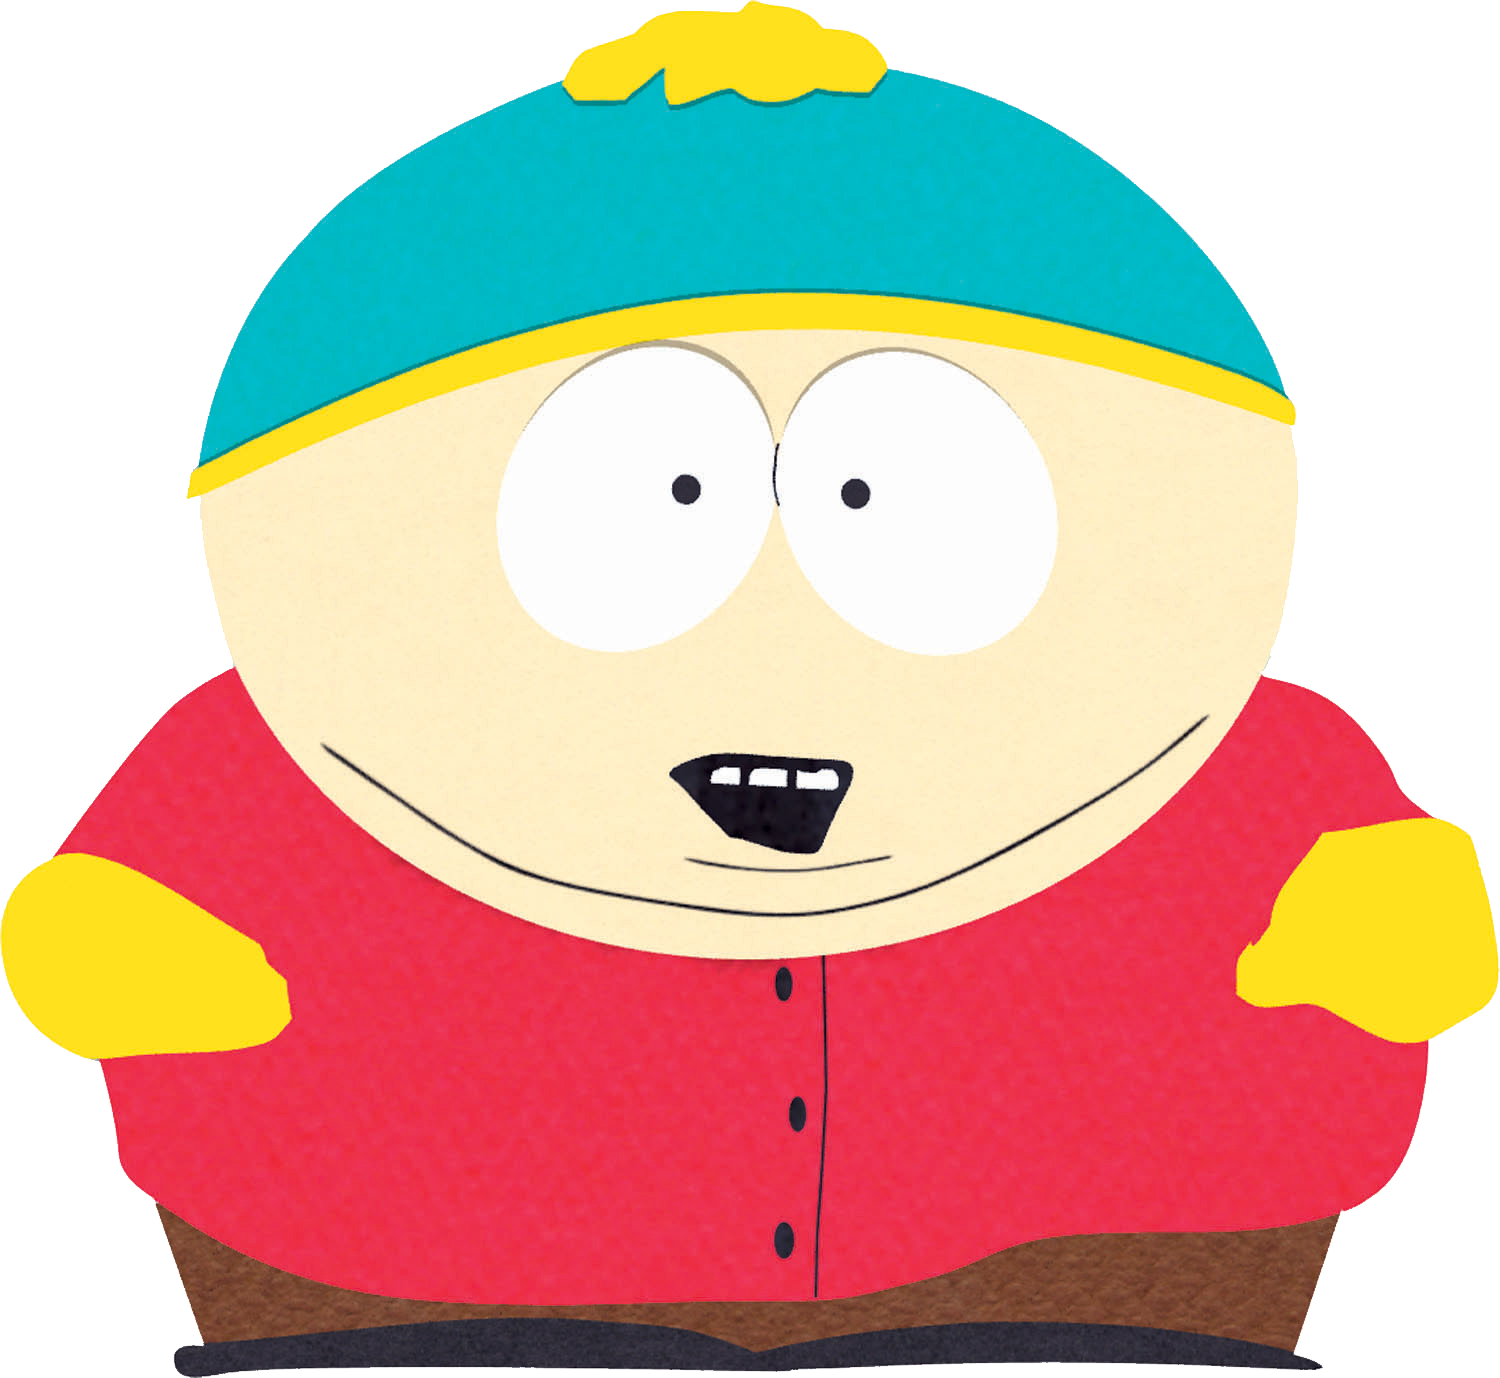 eric cartman voice changed